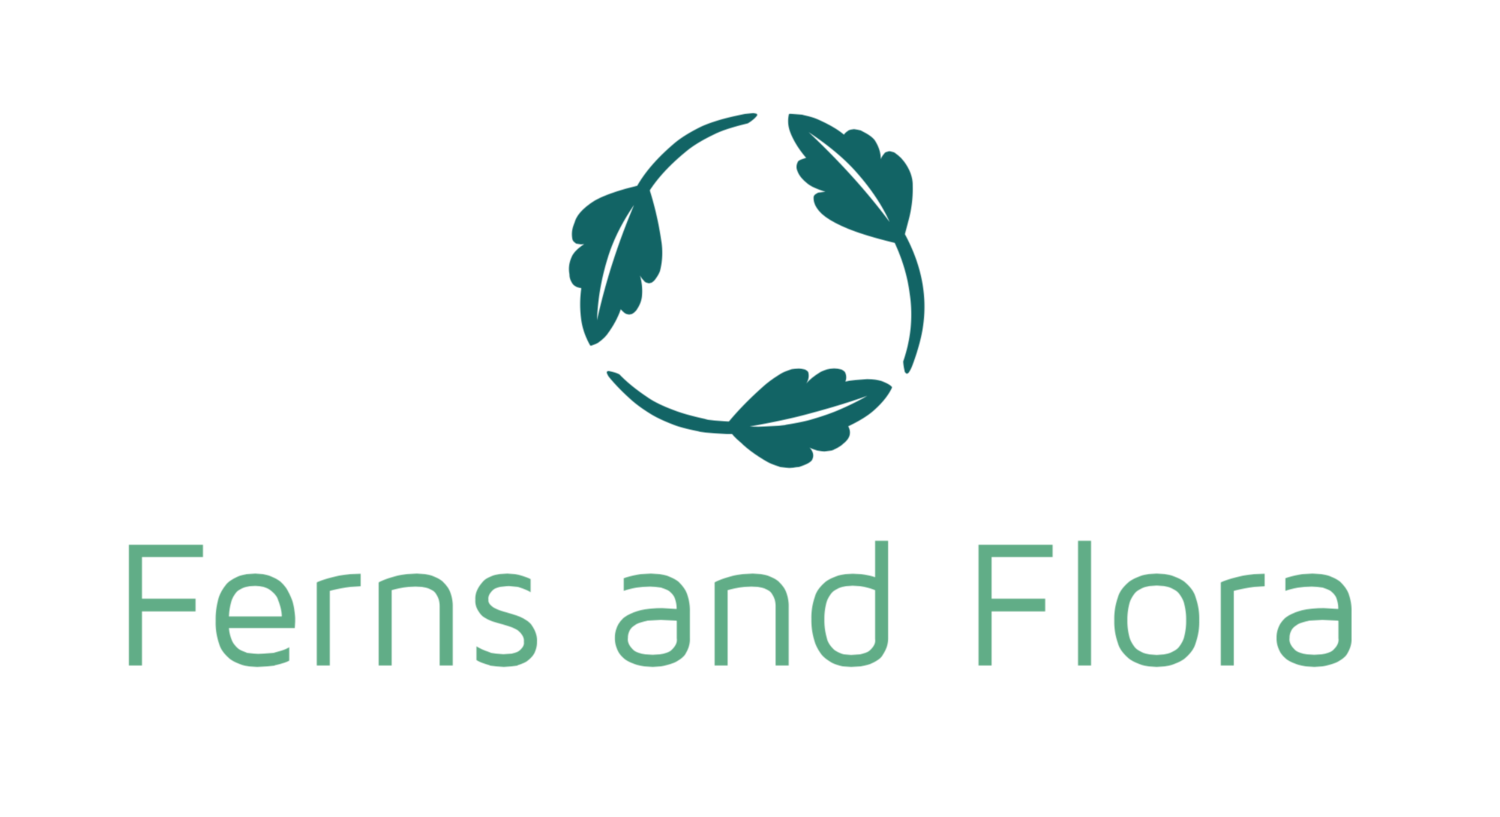 Ferns and Flora